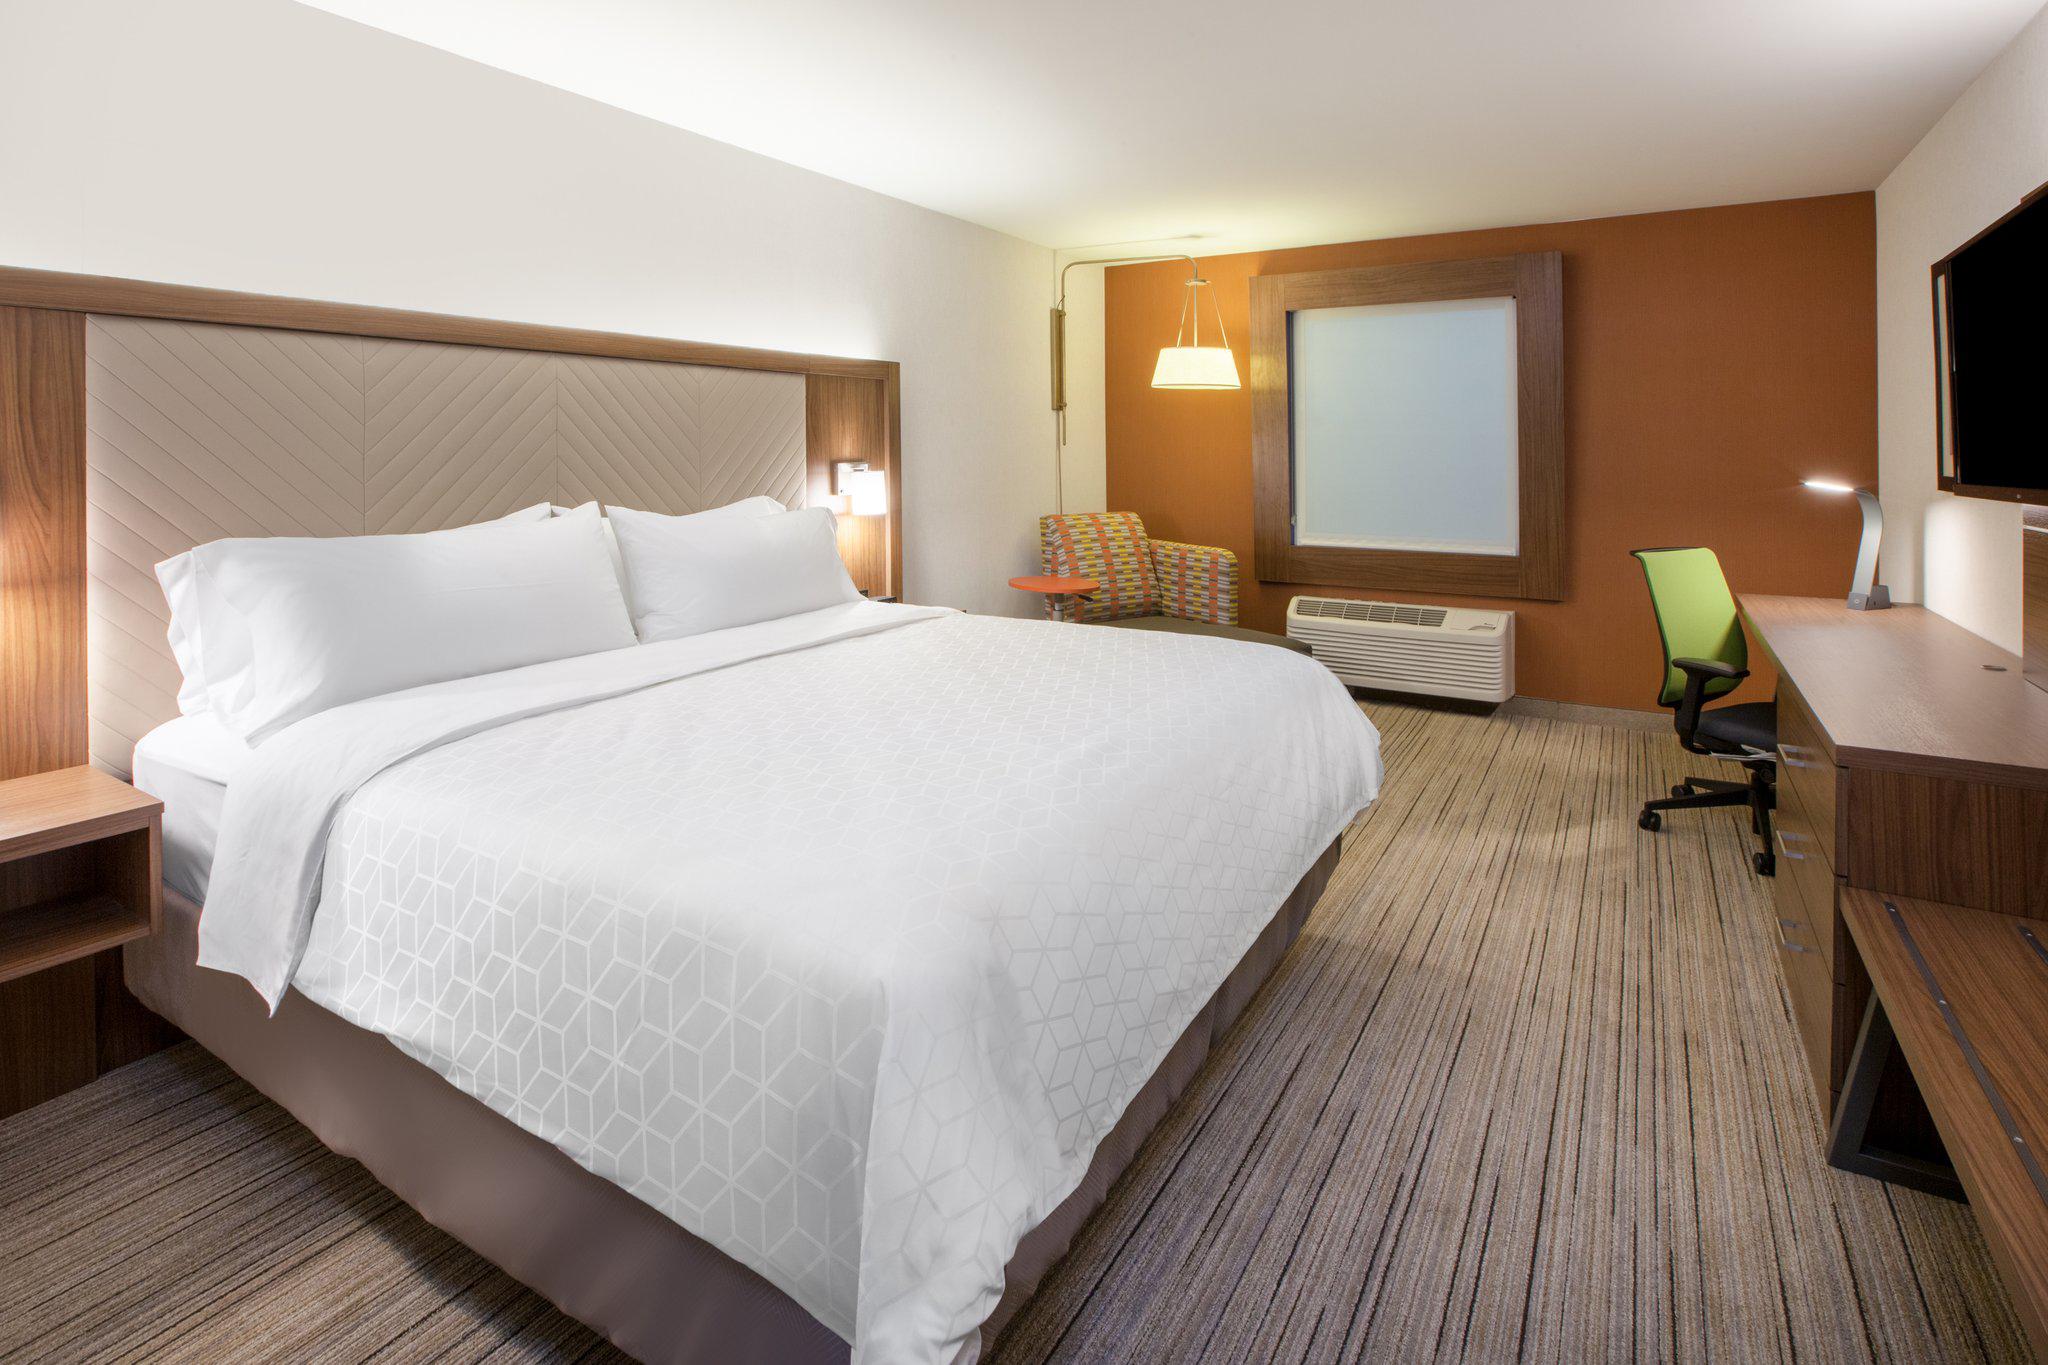 Holiday Inn Express & Suites Halifax – Dartmouth, an IHG Hotel Dartmouth (902)431-1122